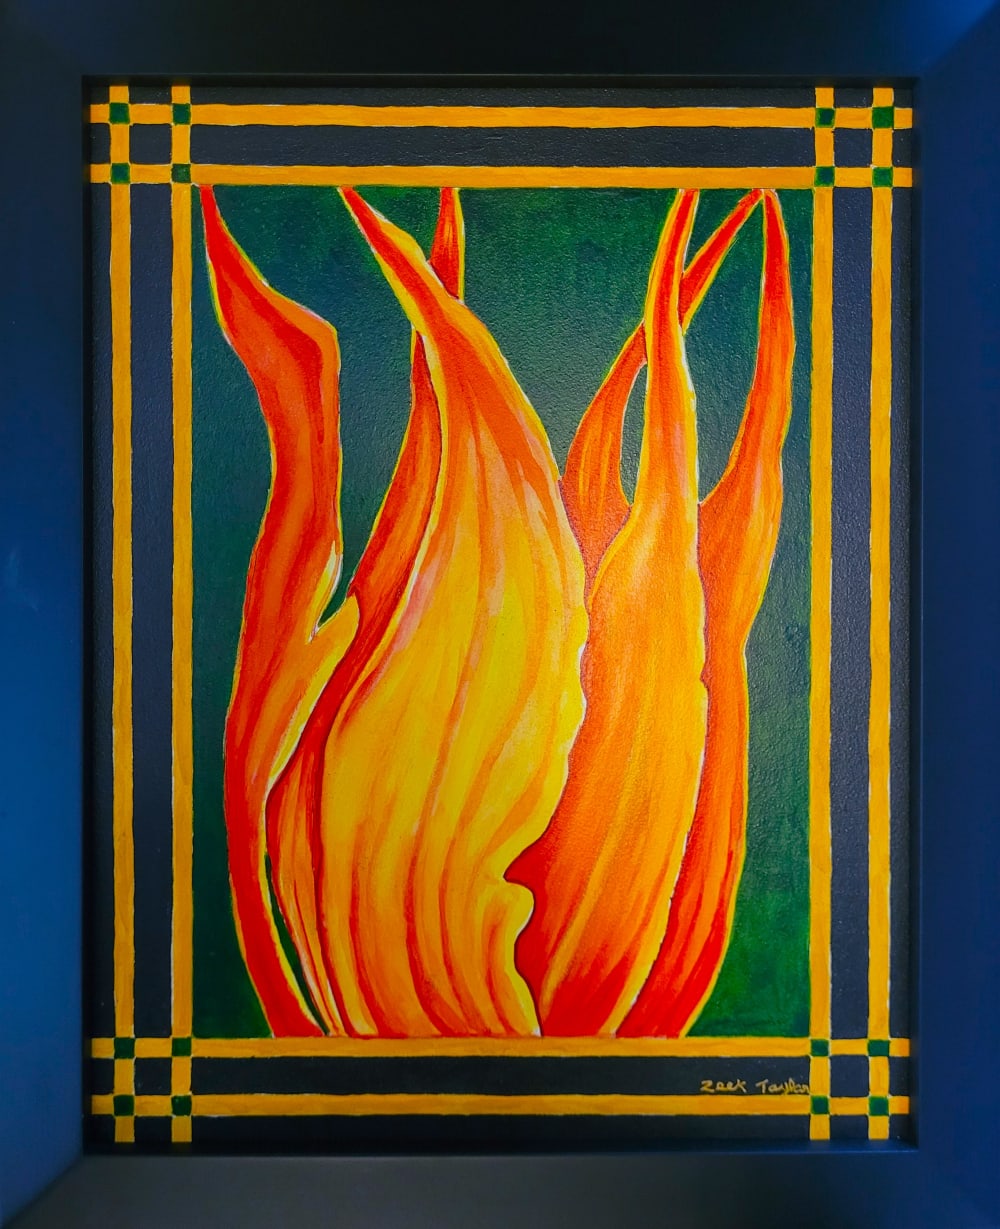 Zeek Taylor : Flame Tulip